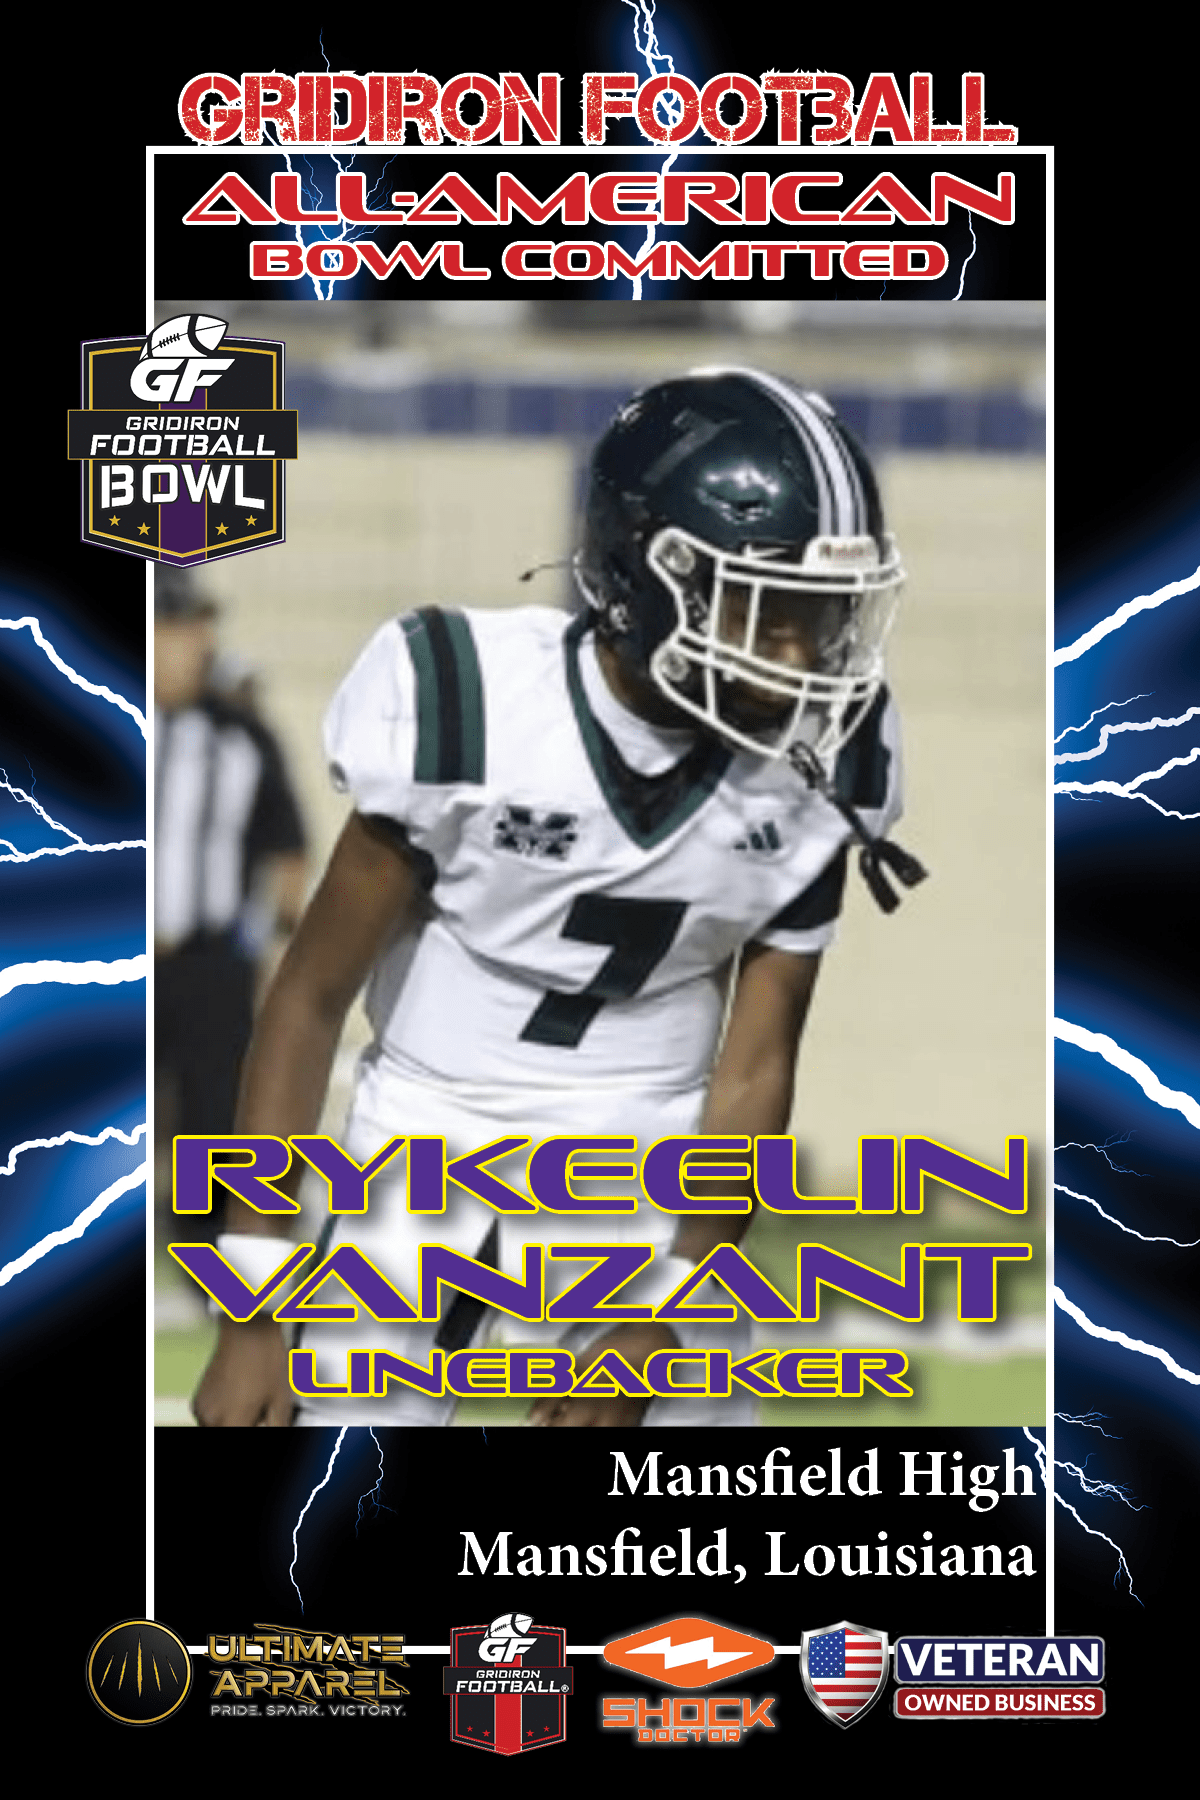 BREAKING NEWS: Mansfield High School (La.) LB Rykeelin Vanzant commits to Gridiron Football All-American Bowl